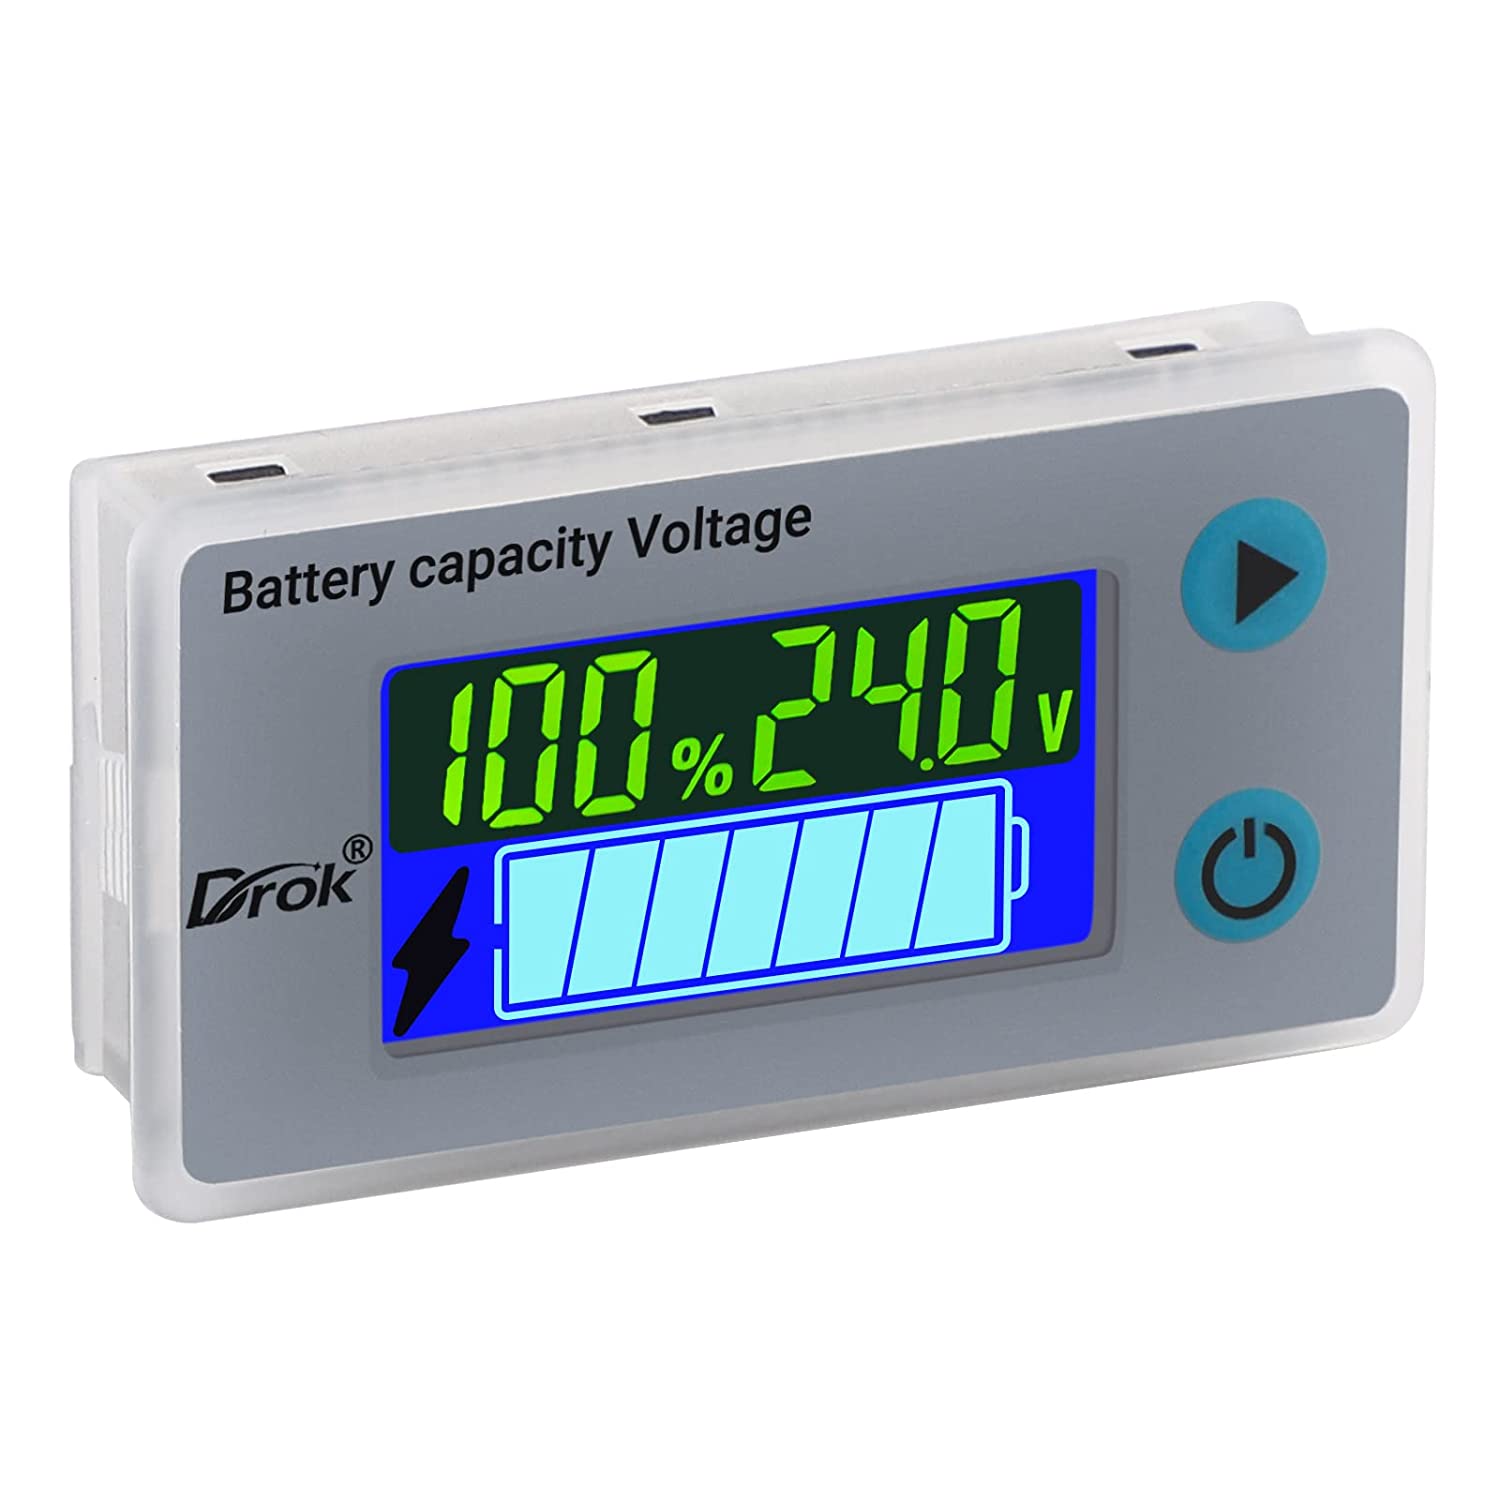 https://www.droking.com/image/cache/catalog/24V-Battery-Capacity-Monitor-DROK-10-100V-24V-36V-48V-Digital-Battery-St/24V-Battery-Capacity-Monitor-DROK-10-100V-24V-36V-48V-Digital-Battery-Status-Tes-1500x1500.jpg